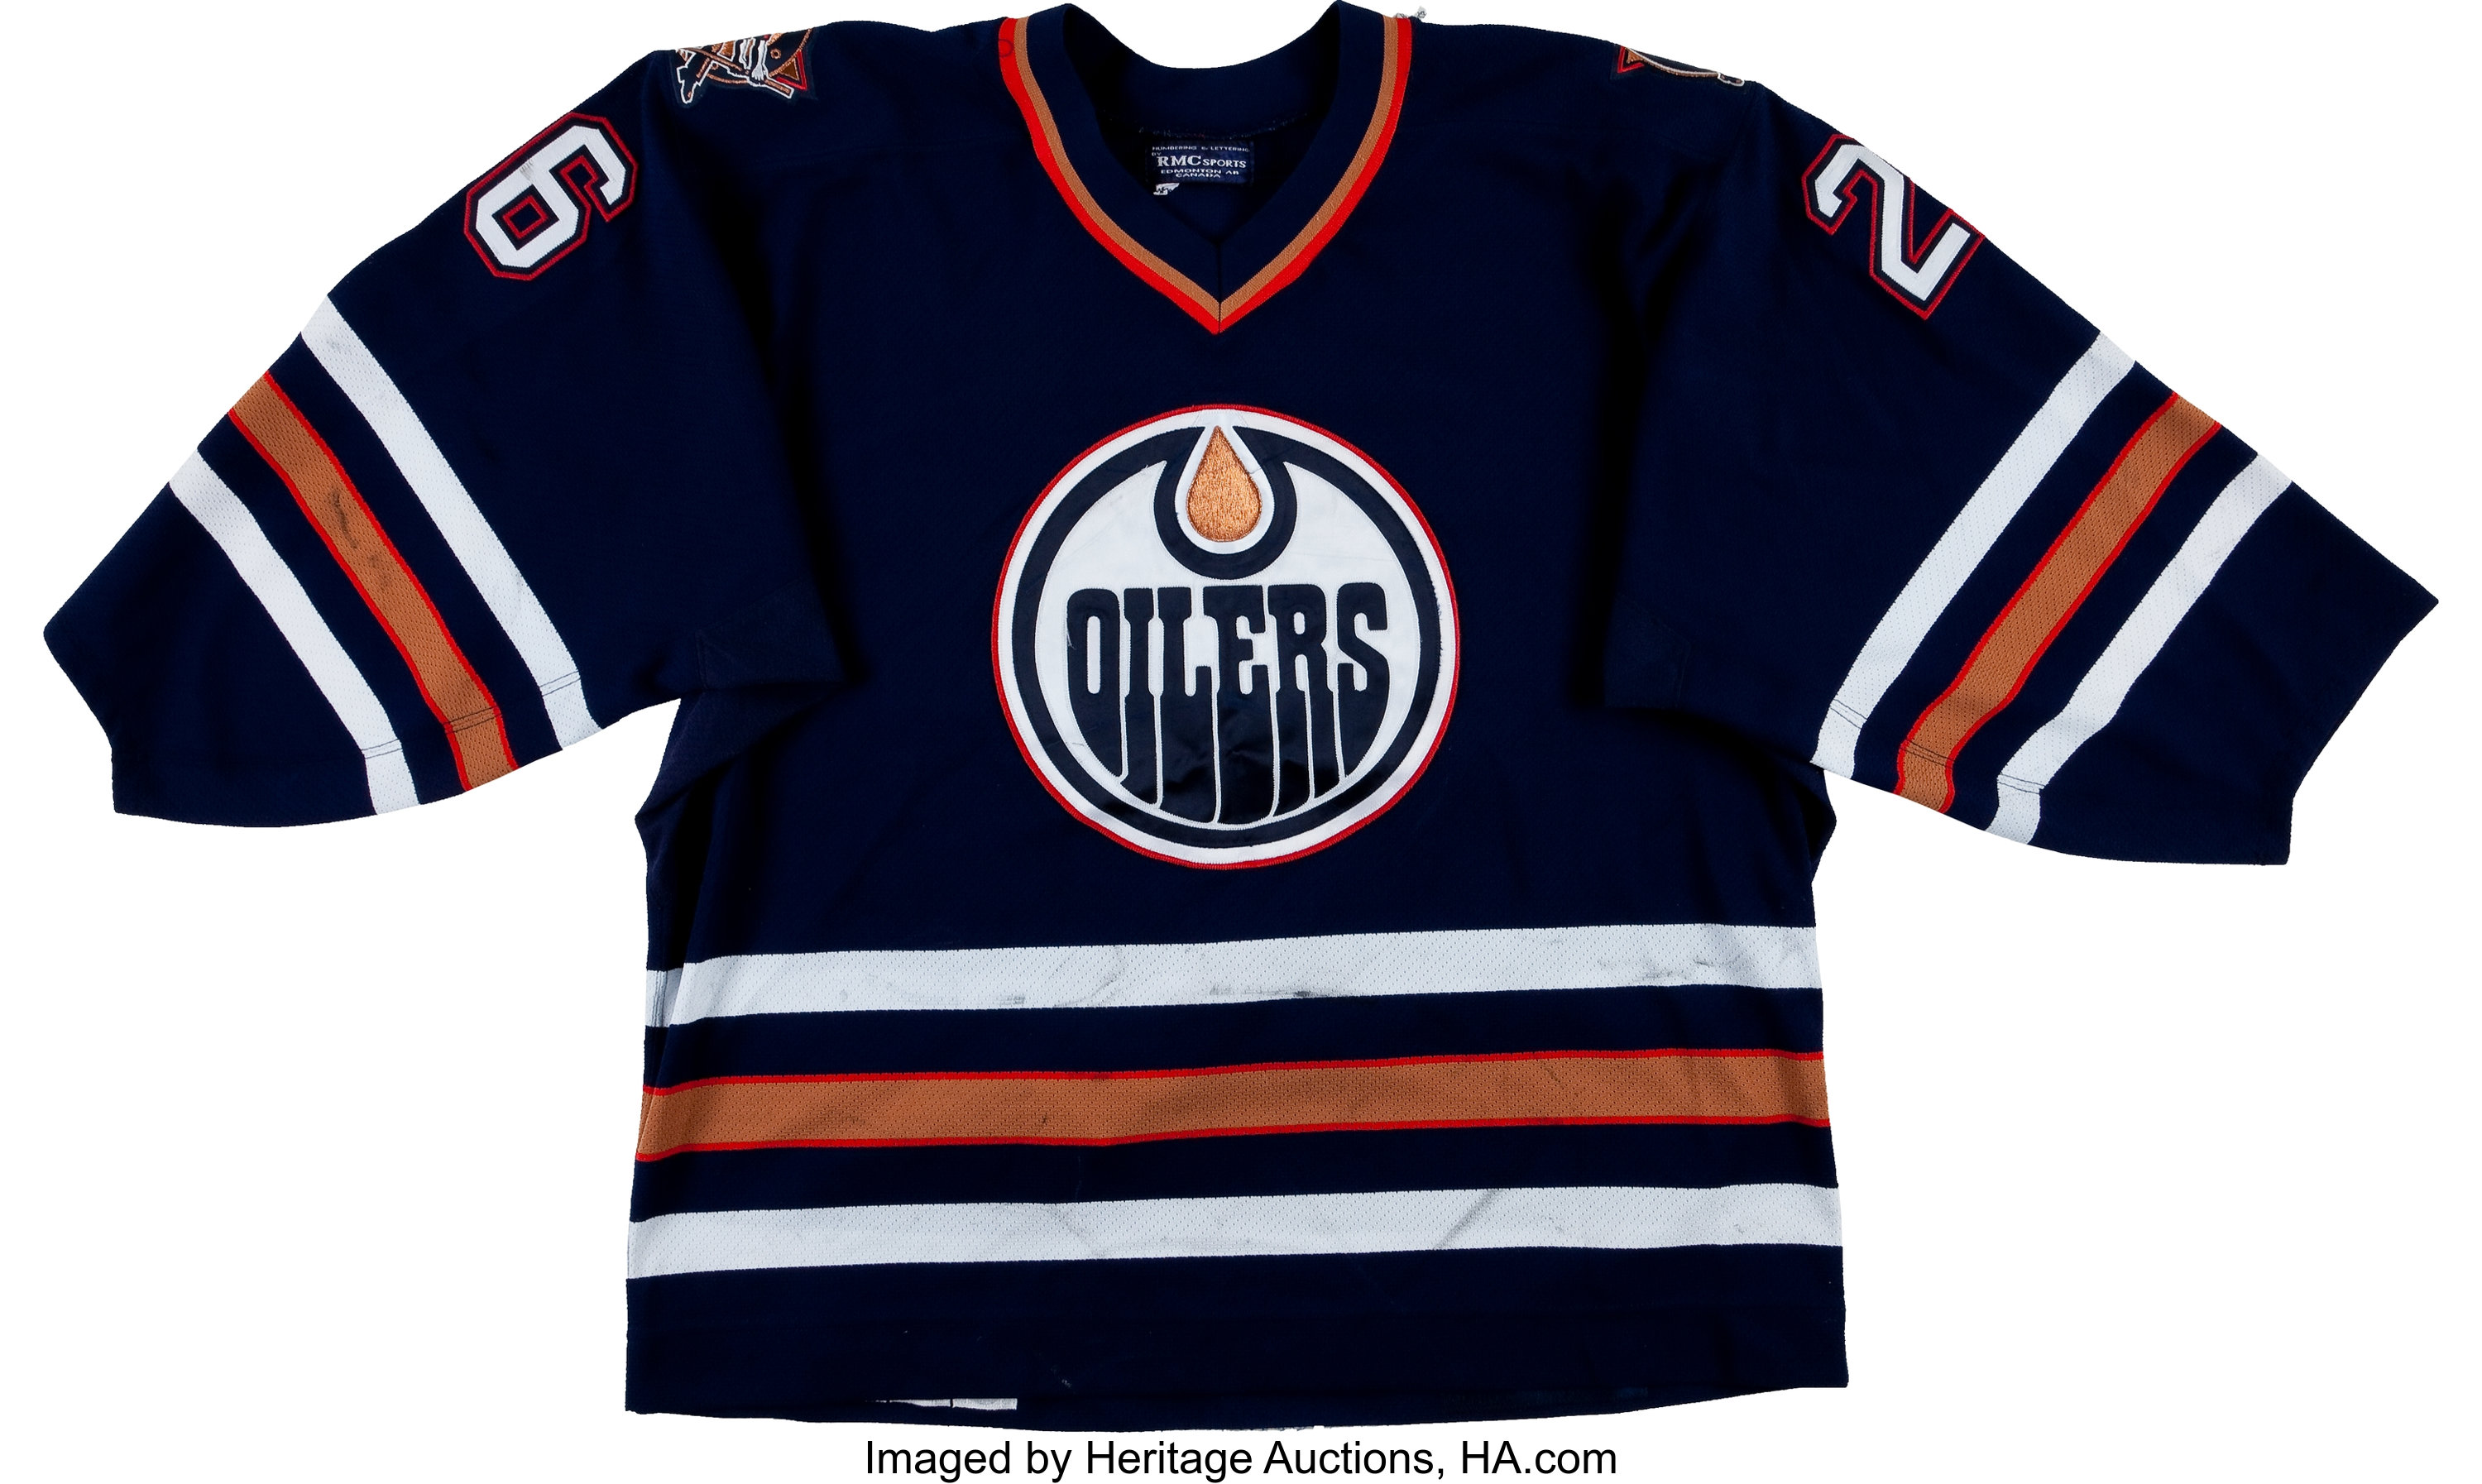 2002-03 Todd Marchant Edmonton Oilers Game Worn Jersey - Alternate